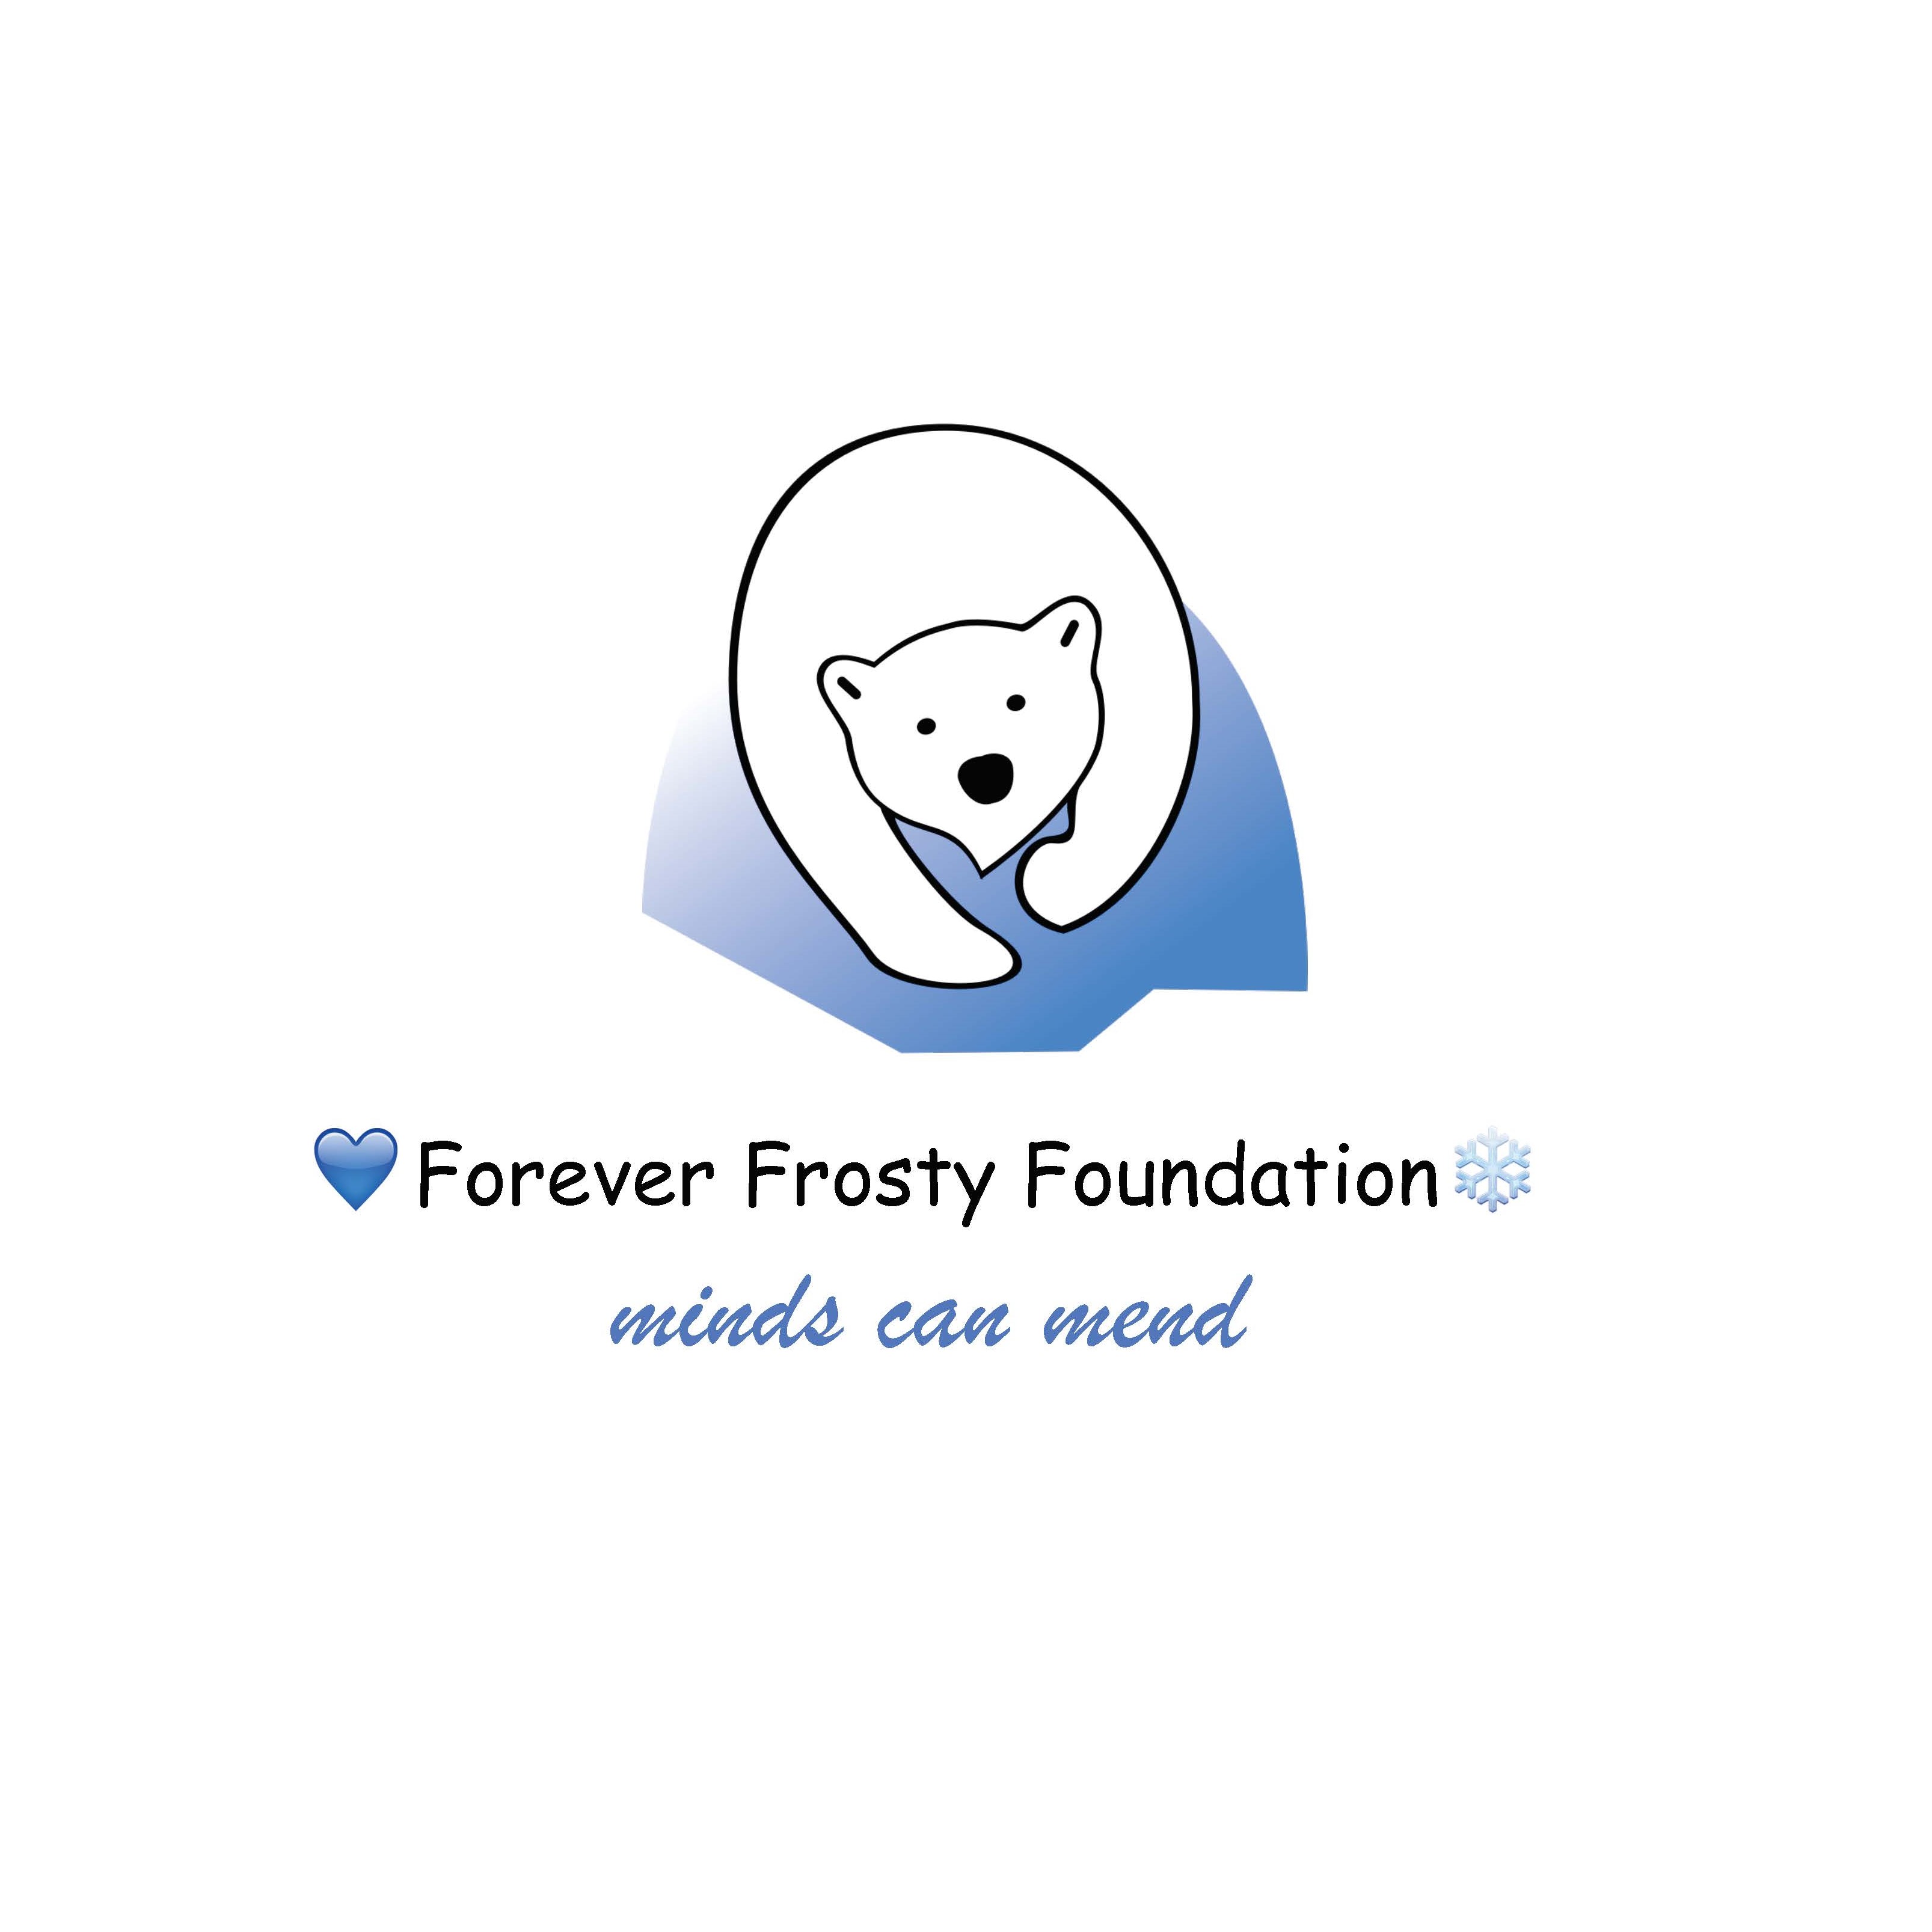 Forever Frosty Foundation